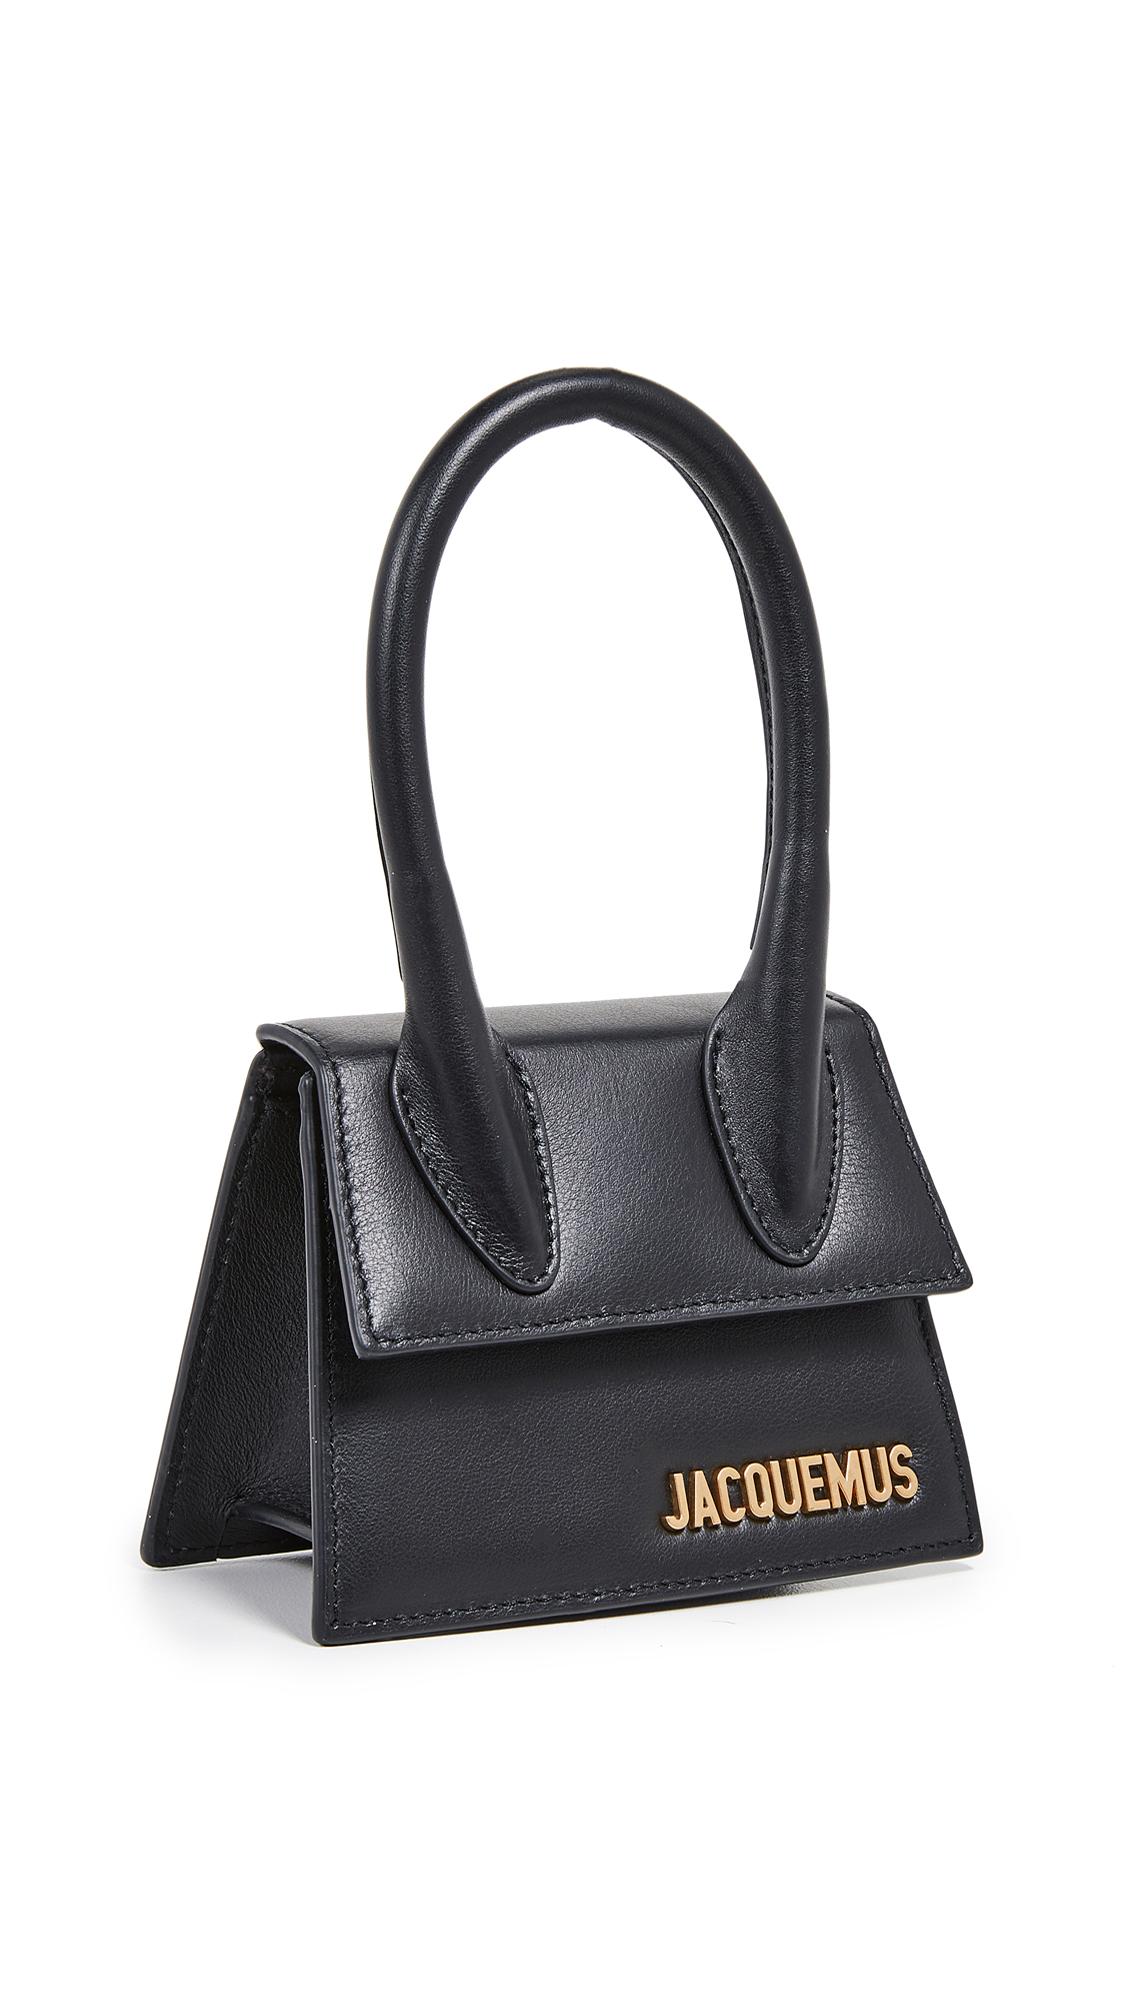 Jacquemus Le Chiquito Black Bag